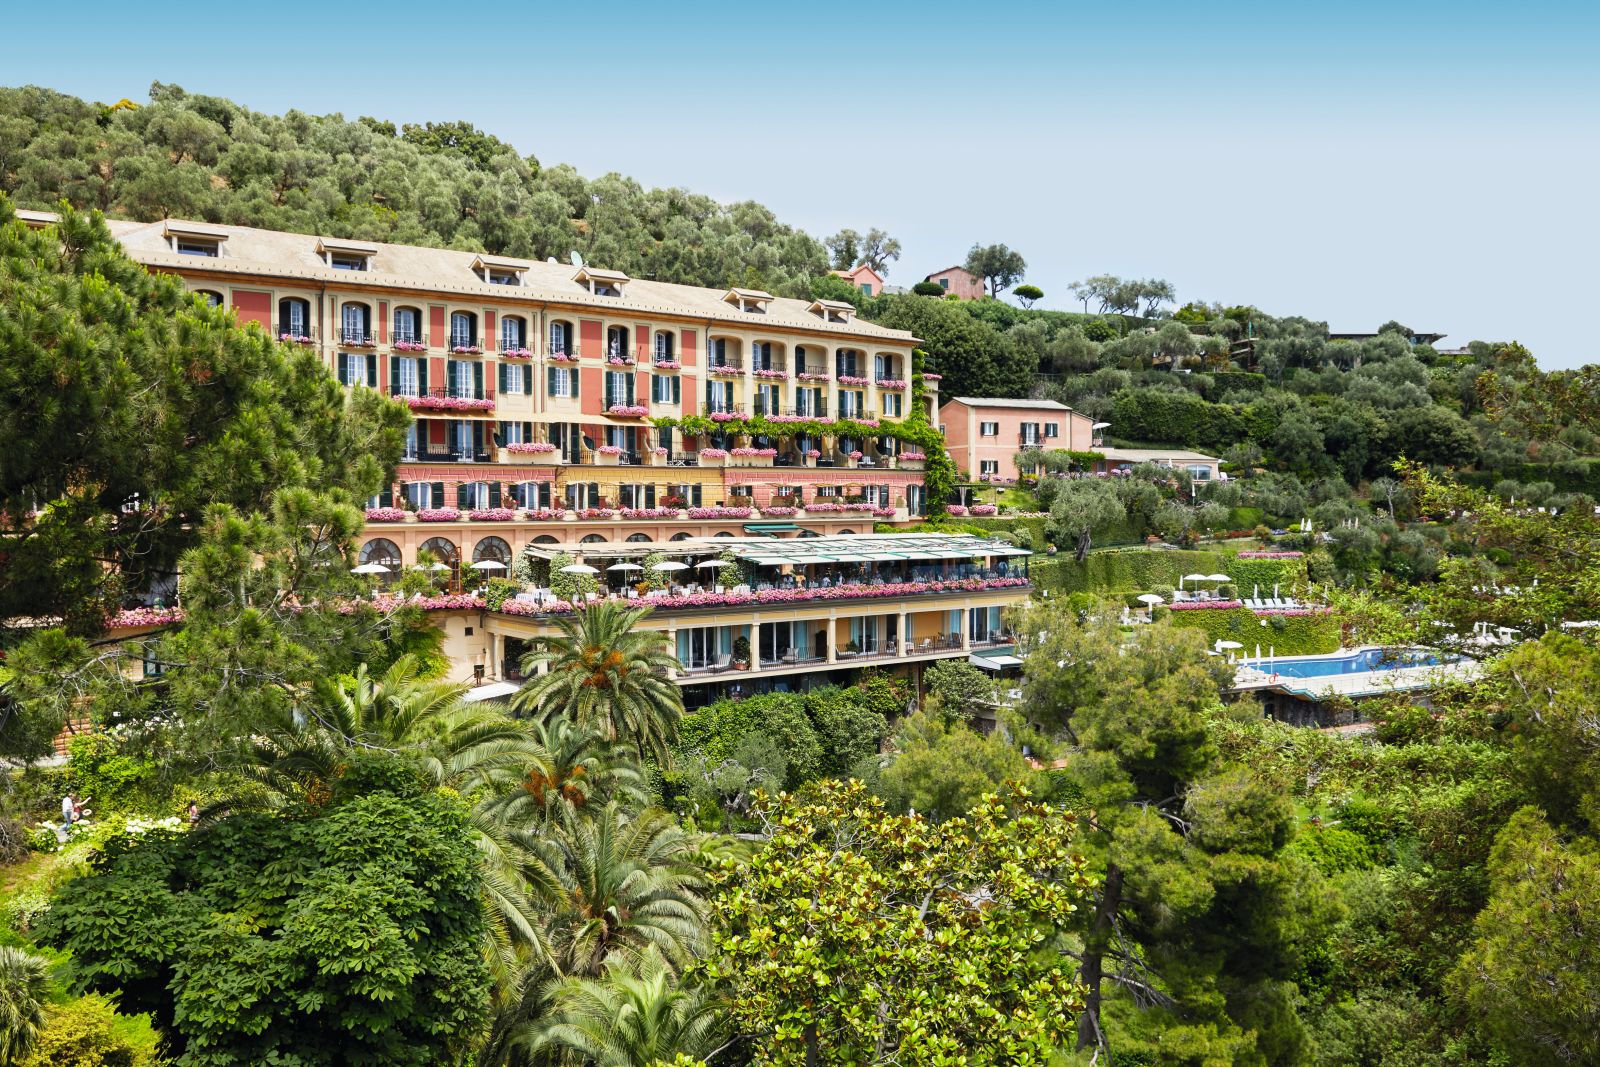 Belmond Hotel Splendido in Portofino, Italy Editorial Stock Image - Image  of italy, italian: 157230194